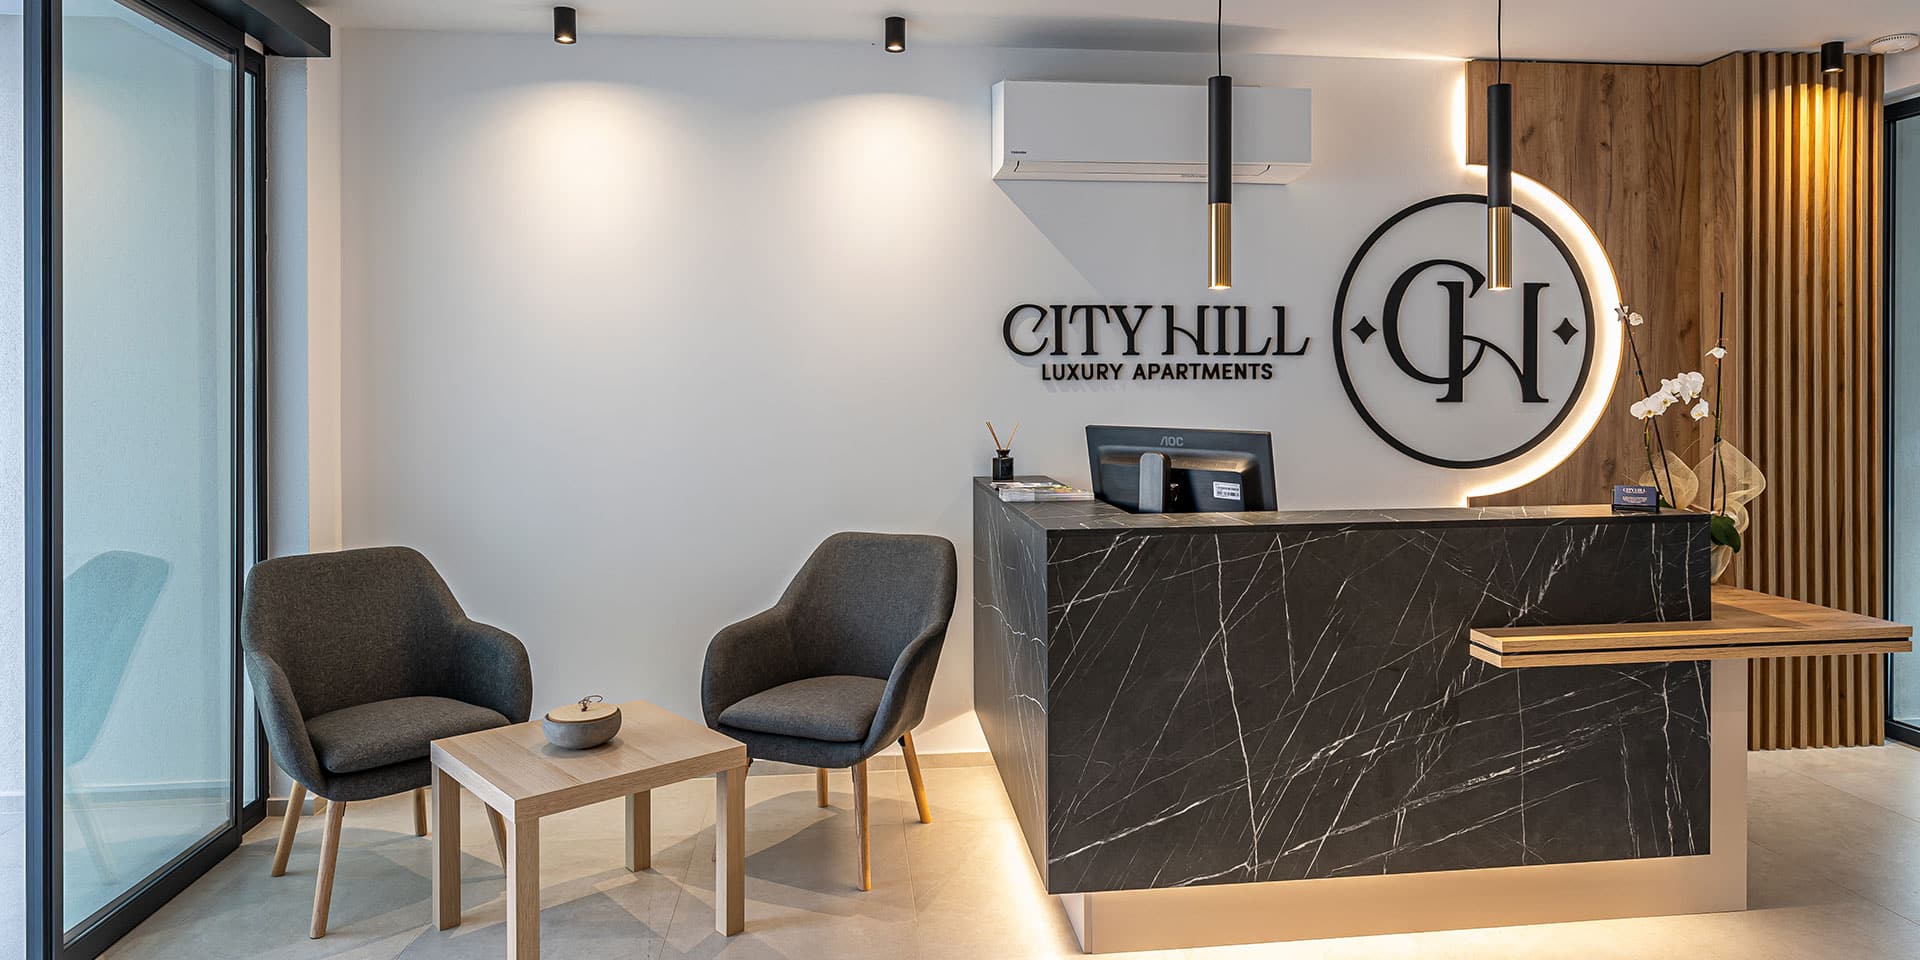 City Hill Luxury Apartments slider 01 pc